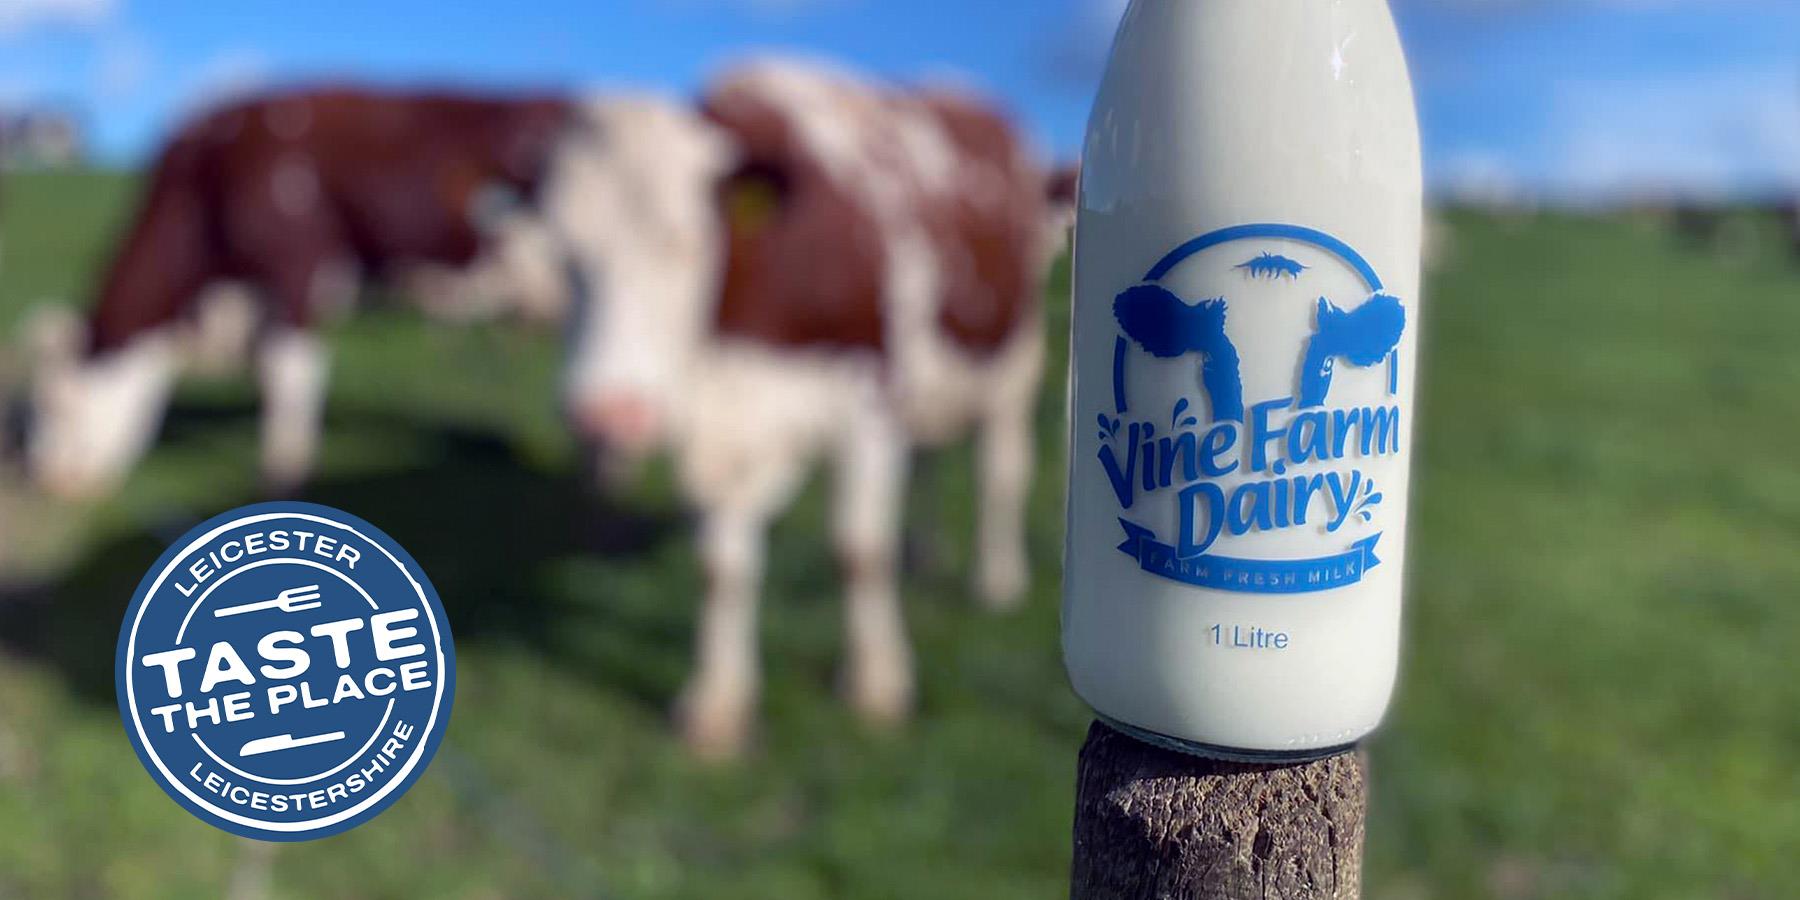 Vine Farm Dairy
